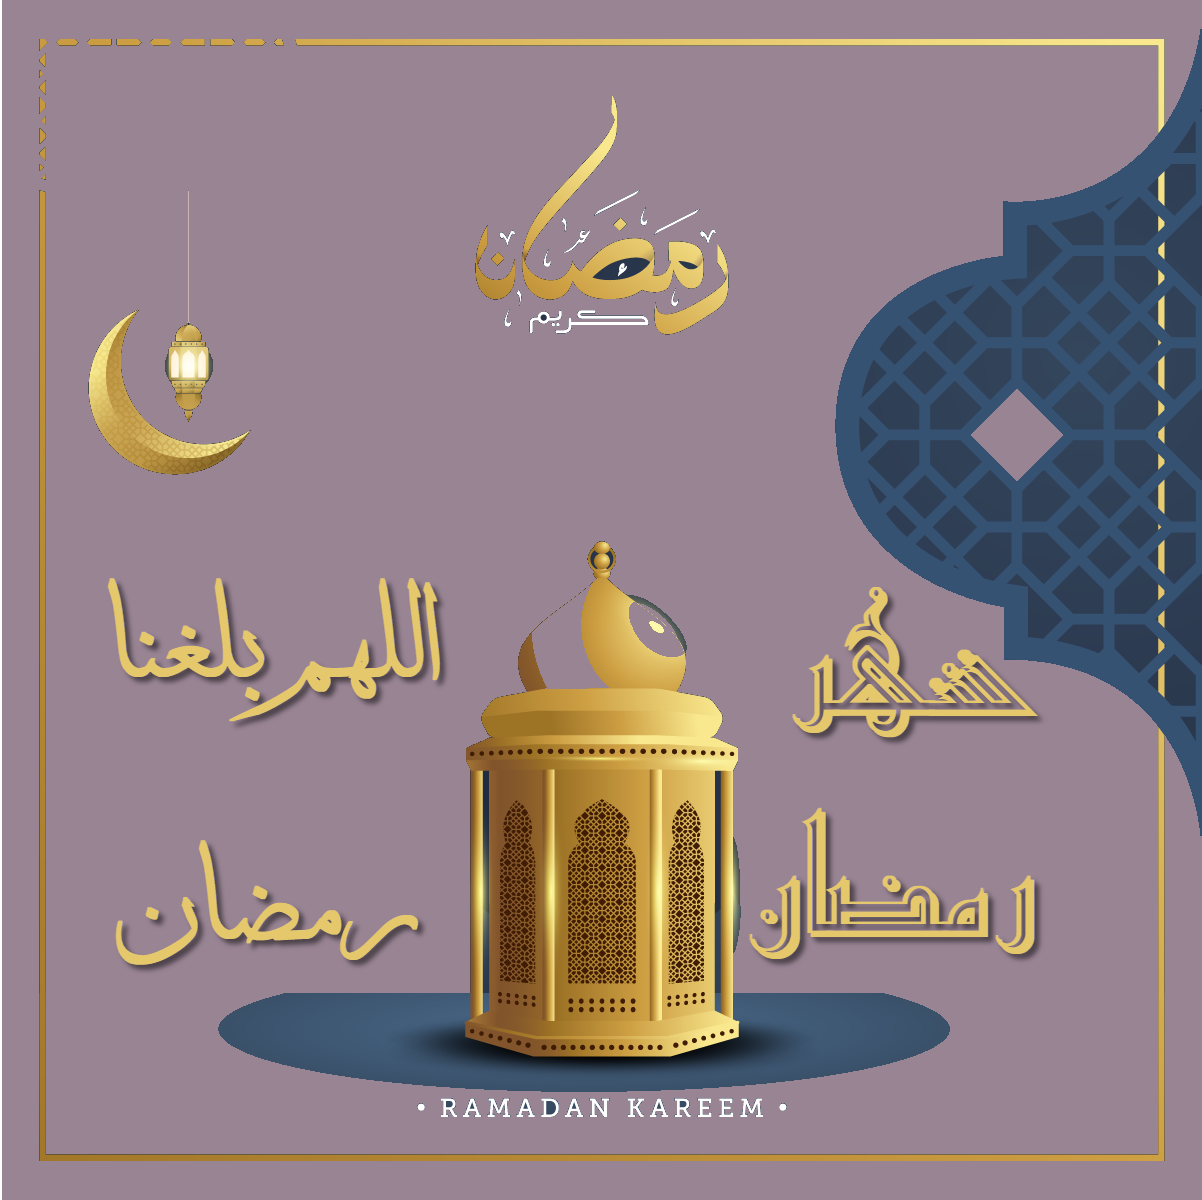 صور رمضان 2020 أجمل صور فوانيس رمضان 2021 بطاقات تهنئة لرمضان تهنئة رمضان بالأسماء 8